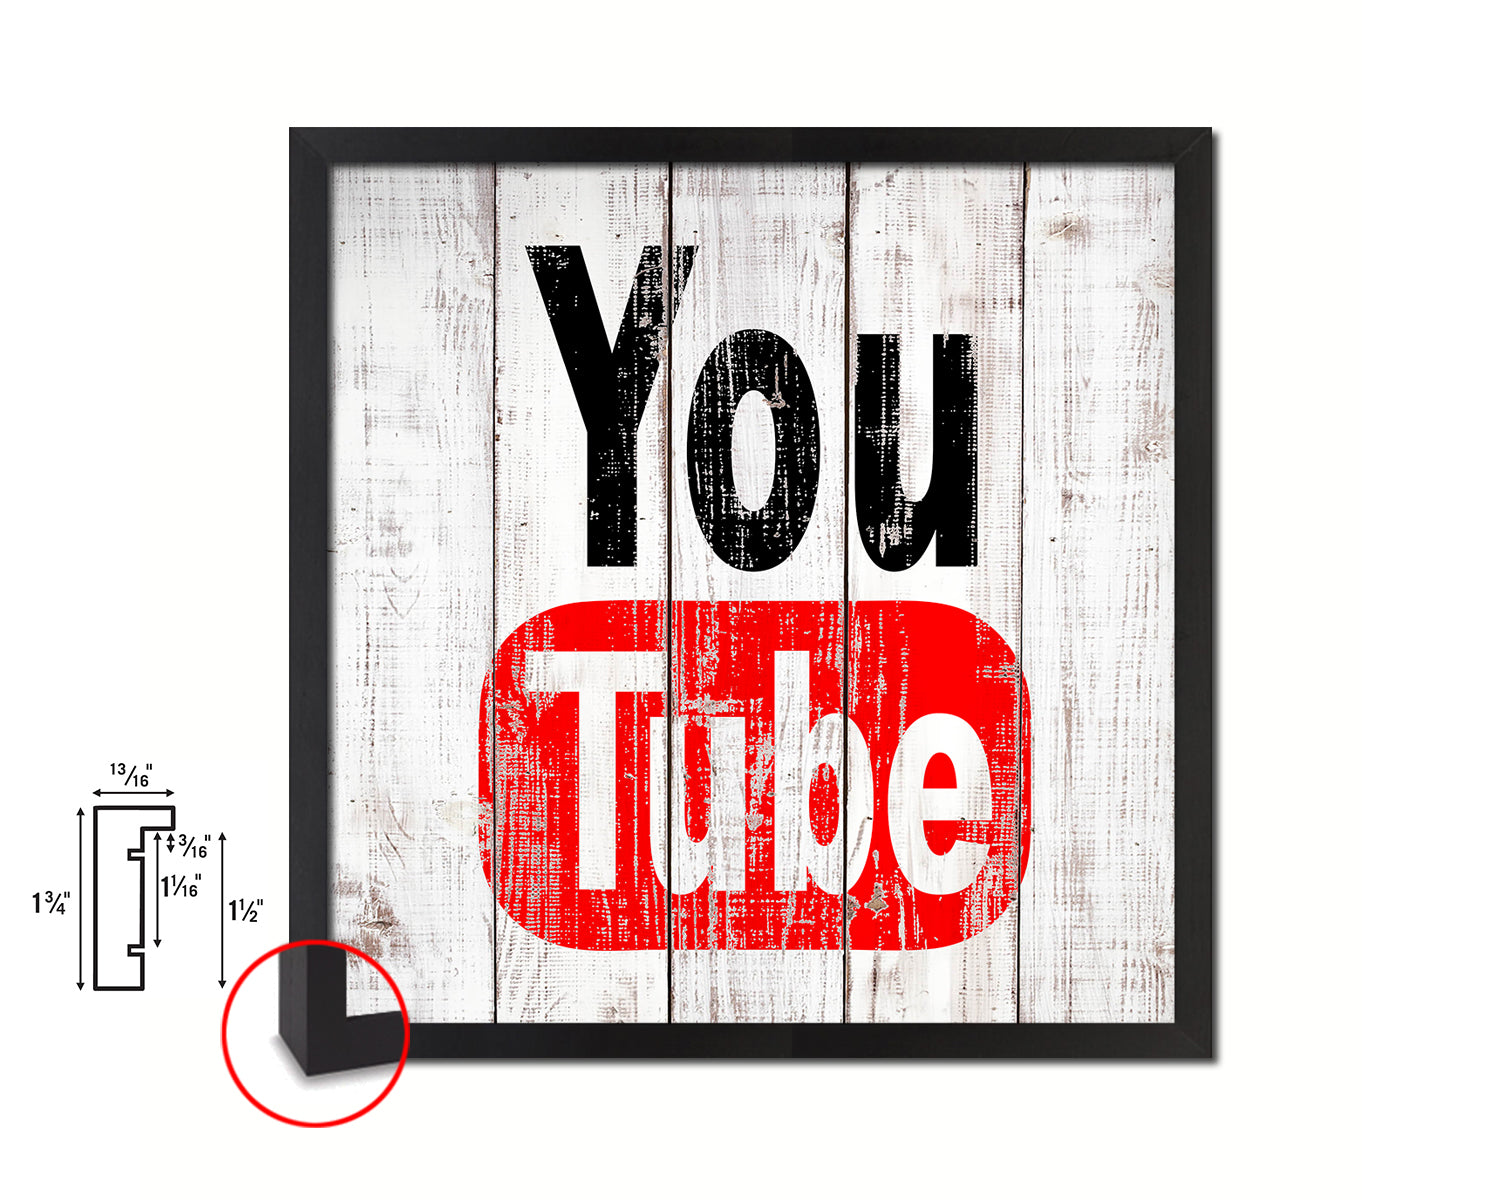 Youtube Social Media Symbol Icons logo Framed Print Shabby Chic Home Decor Wall Art Gifts